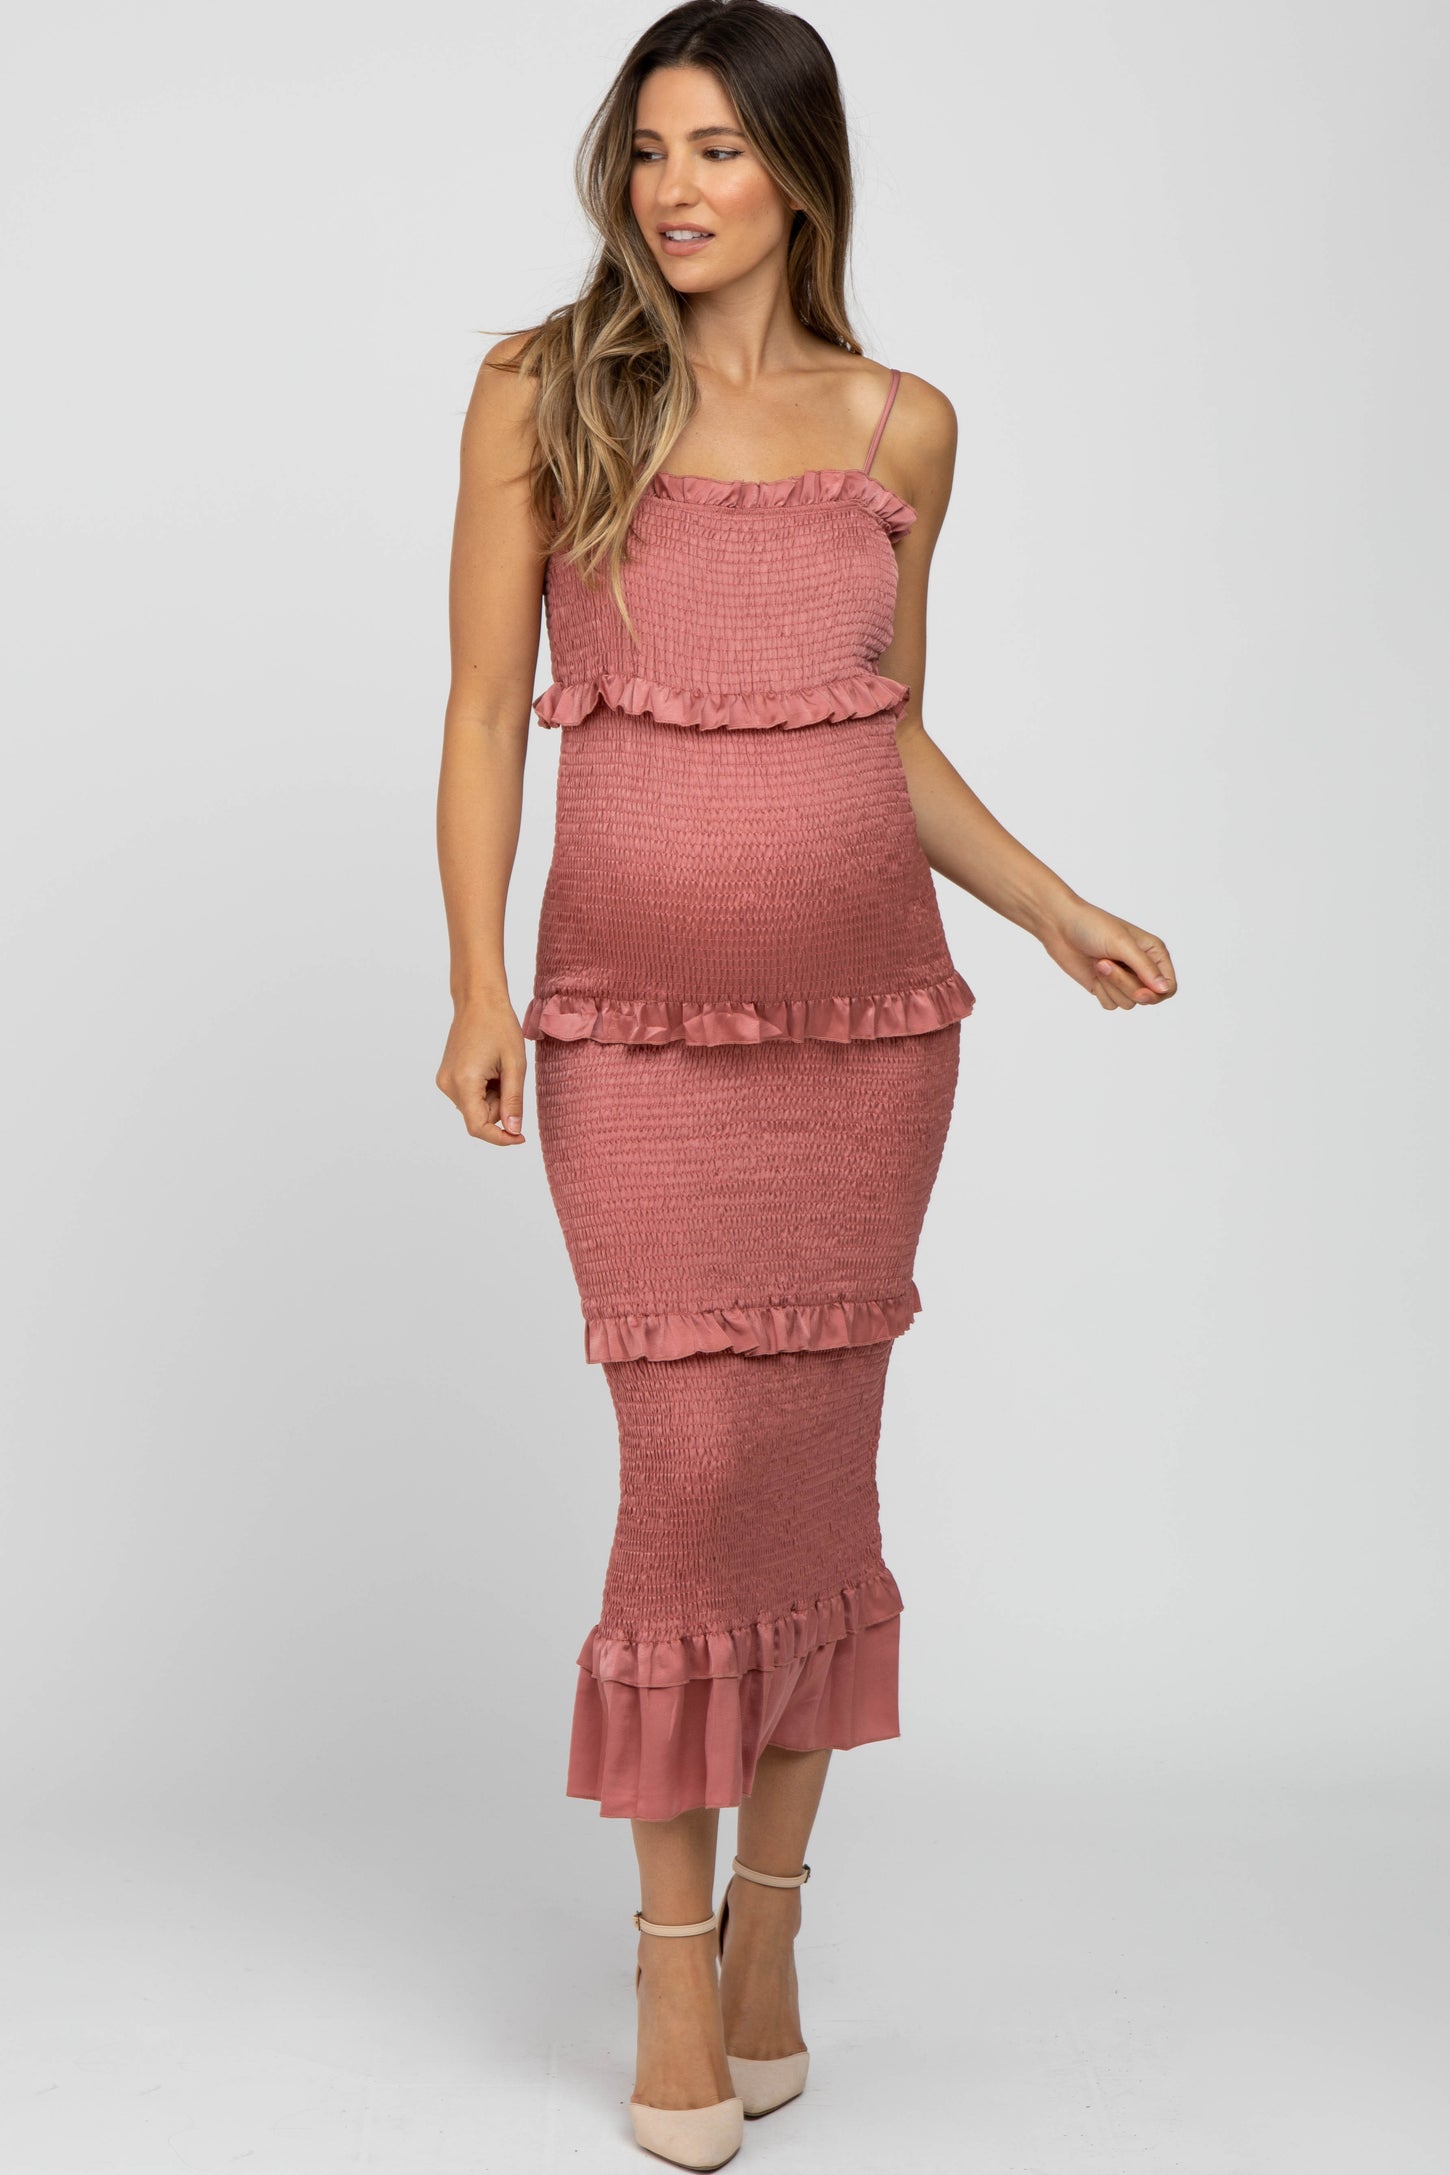 Pinkblush Maternity Mauve Satin Smocked Fitted Maternity Midi Dress